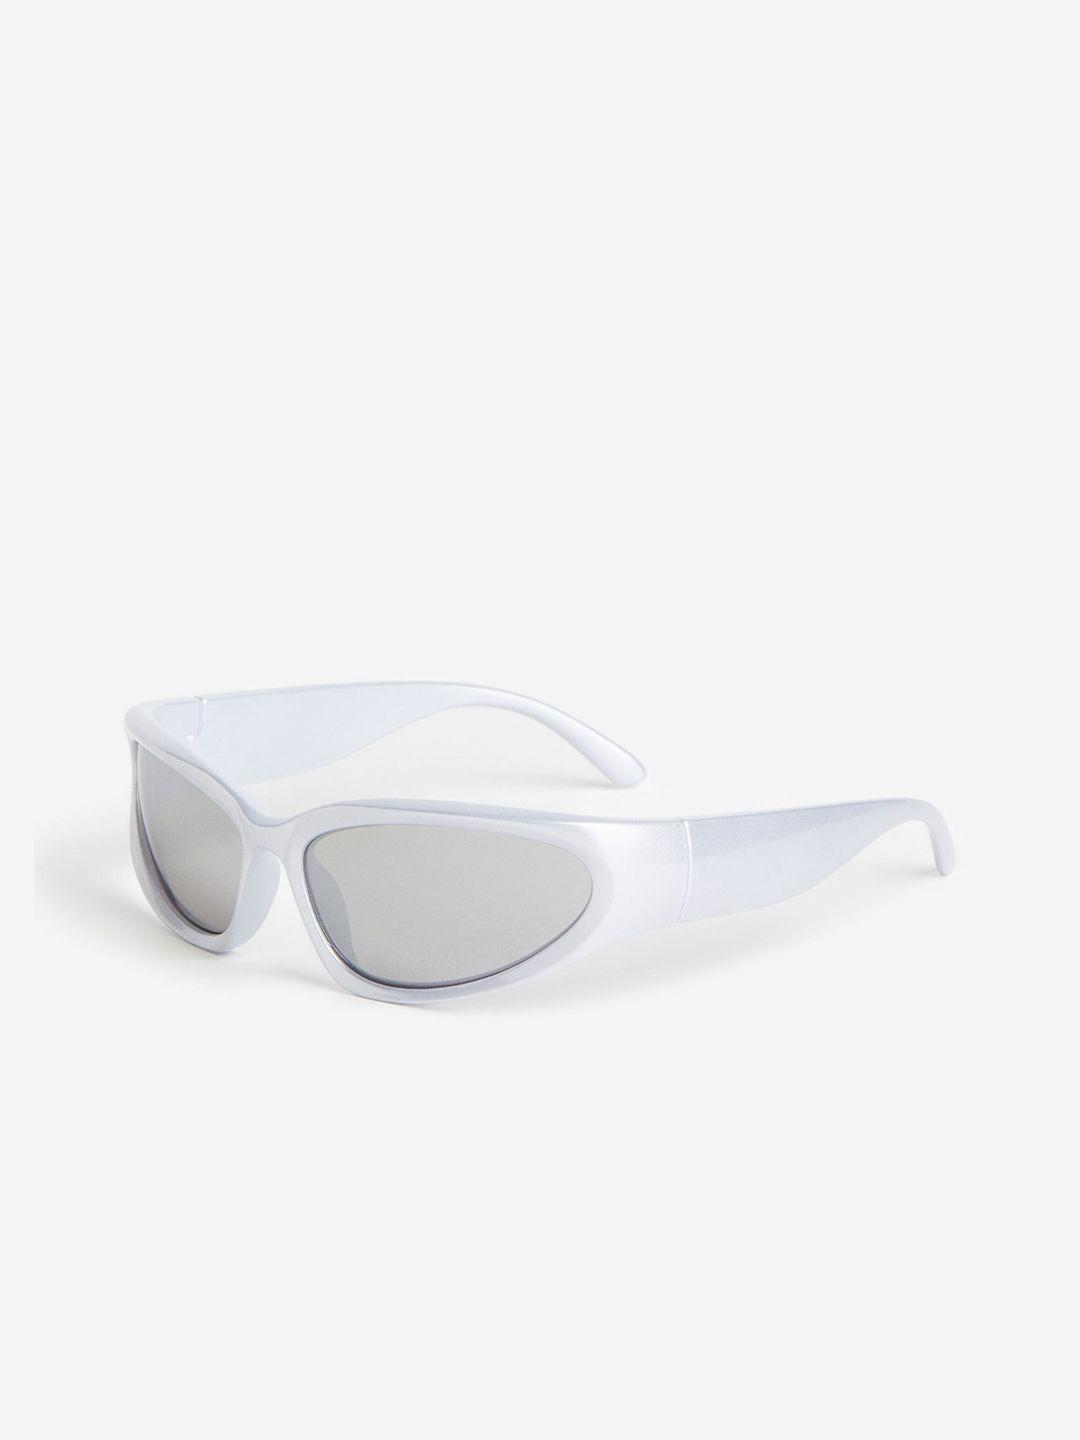 h&m boys sporty sunglasses